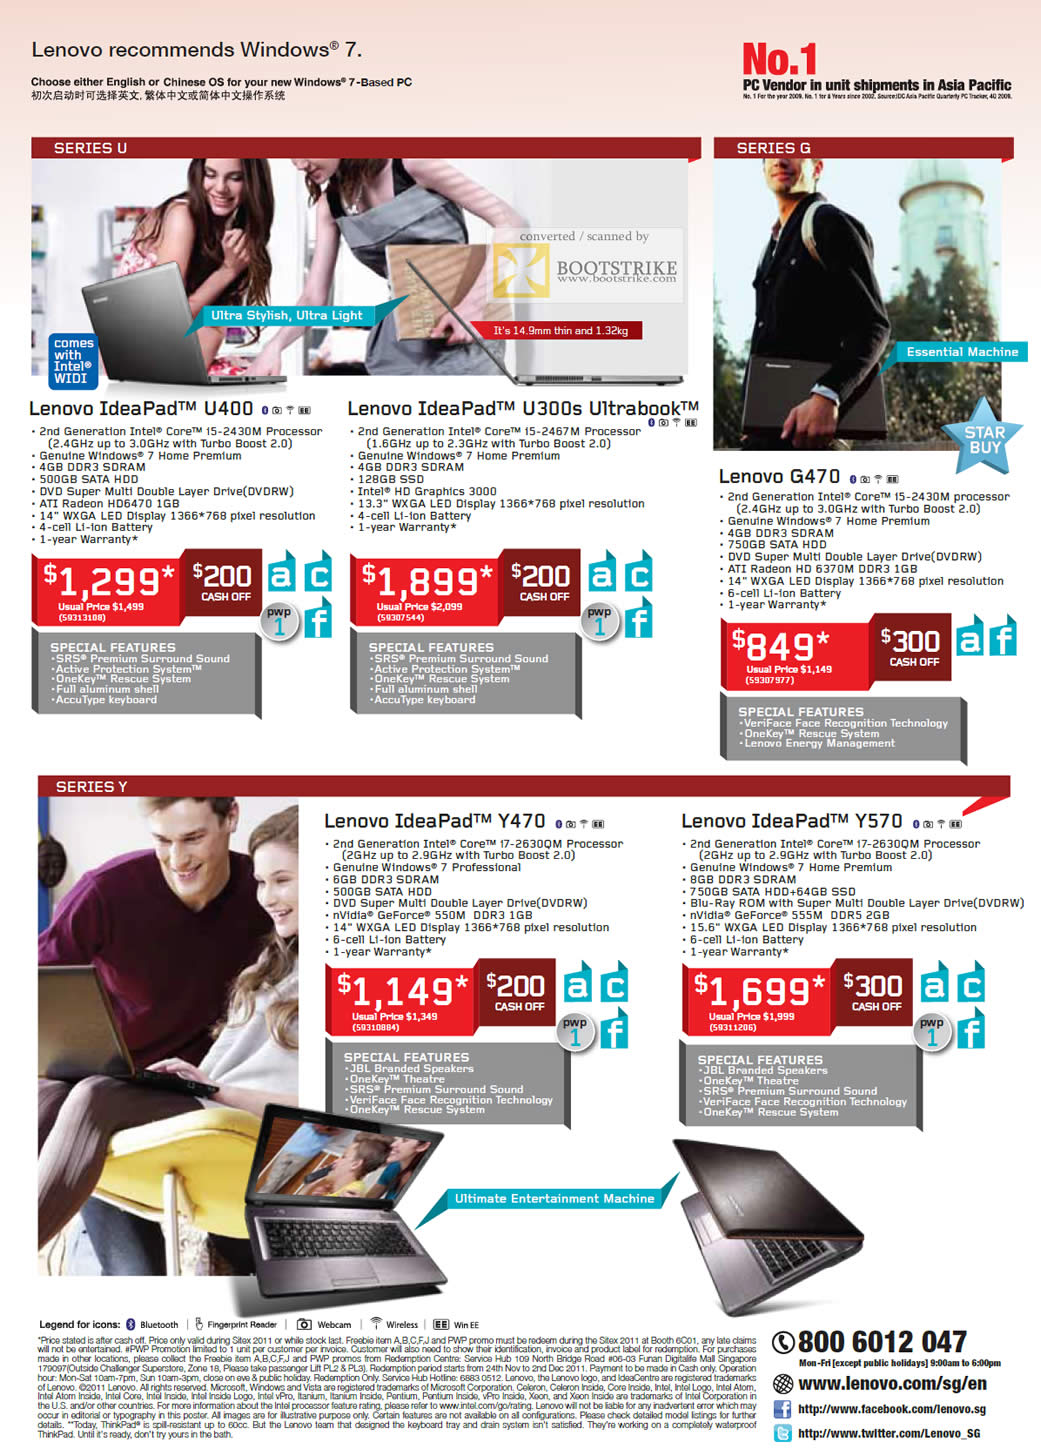 SITEX 2011 price list image brochure of Lenovo Notebooks Ideapad U400, U300s Ultrabook, G470, Series Y IdeaPad Y470, Y570